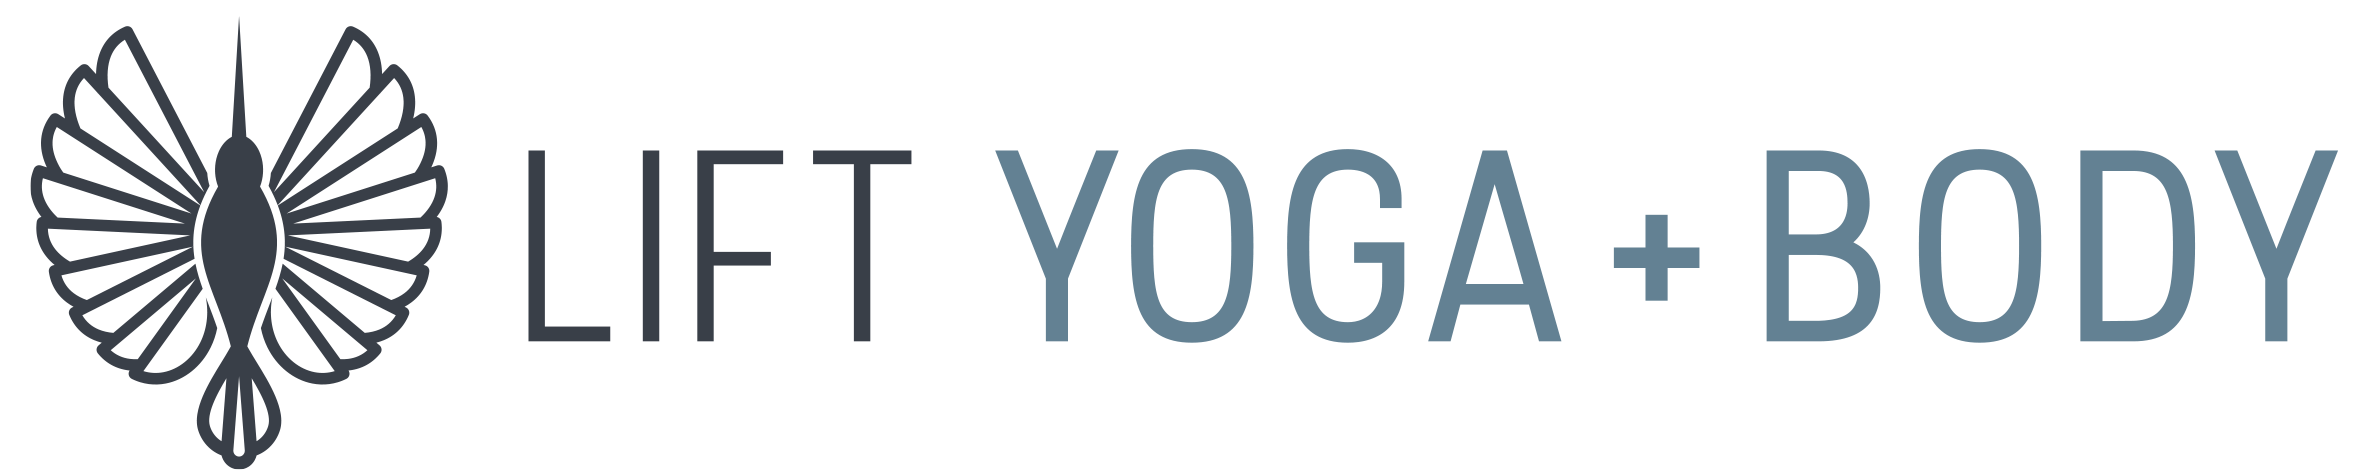 Lift Yoga + Body Main Logo